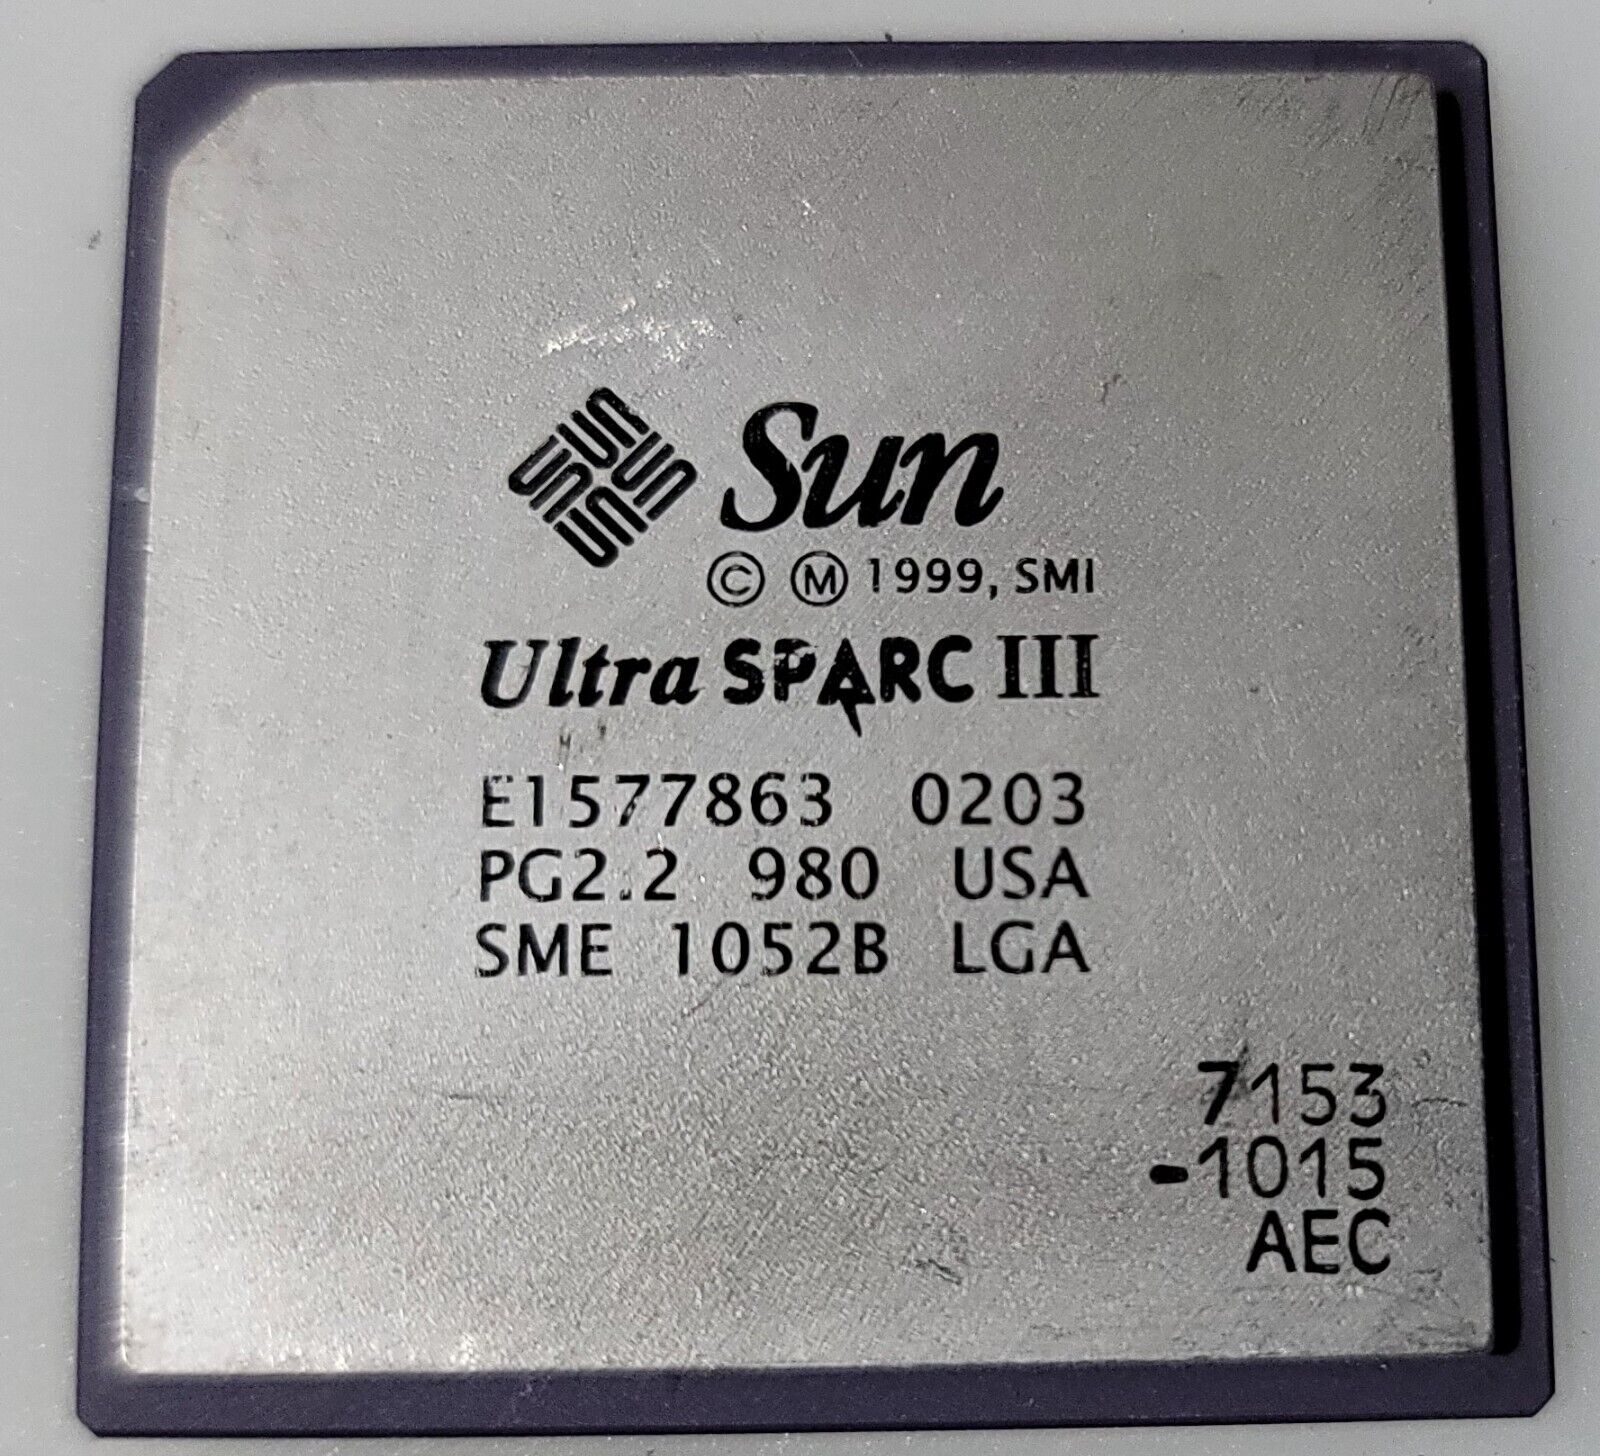 Vintage Rare Sun UltraSparc III SME1052B LGA Processor Collection/Gold Recovery